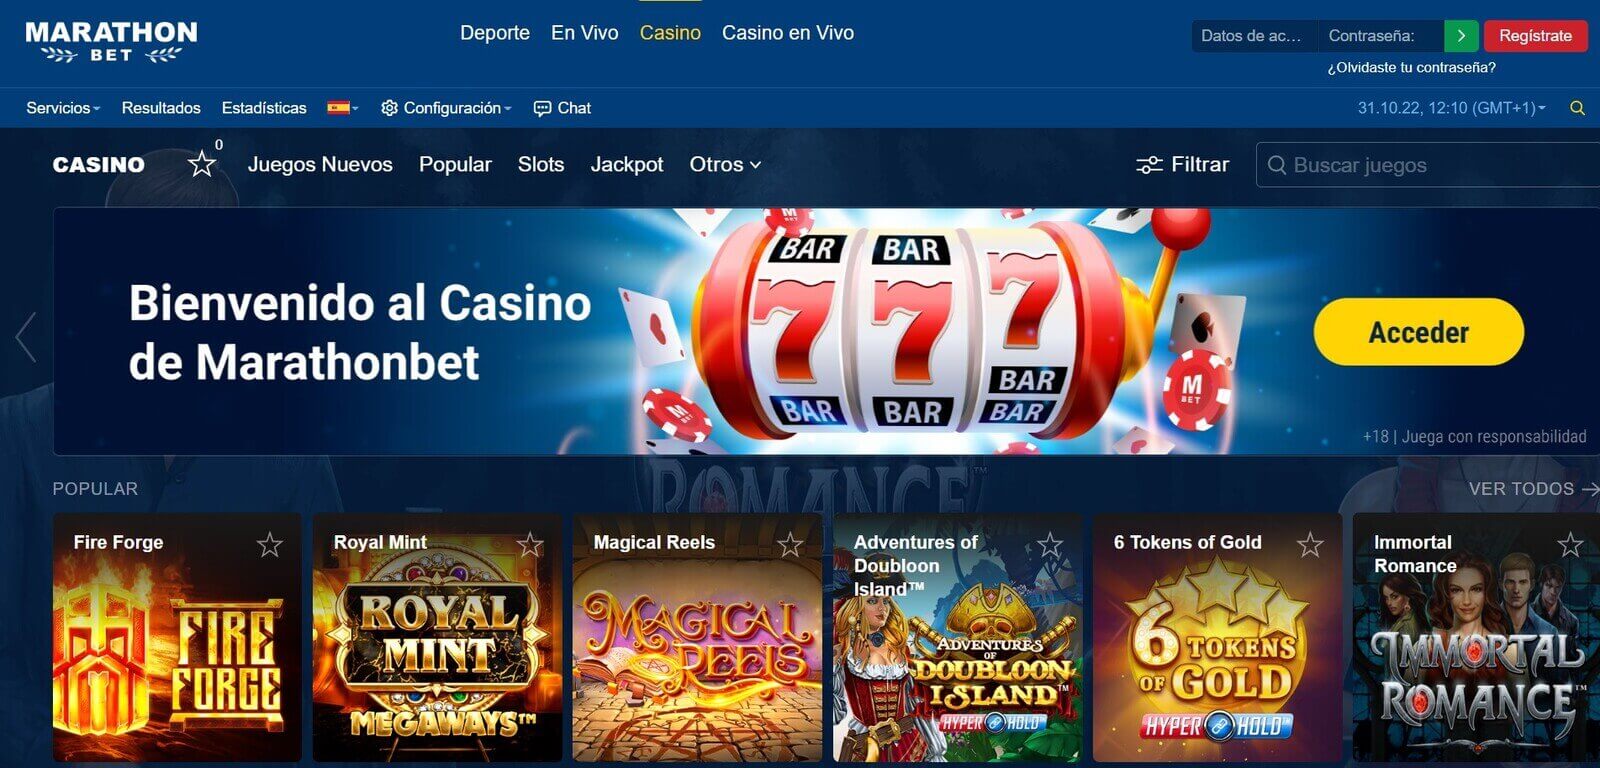 Reseña de MarathonBet Casino online en España de 2022